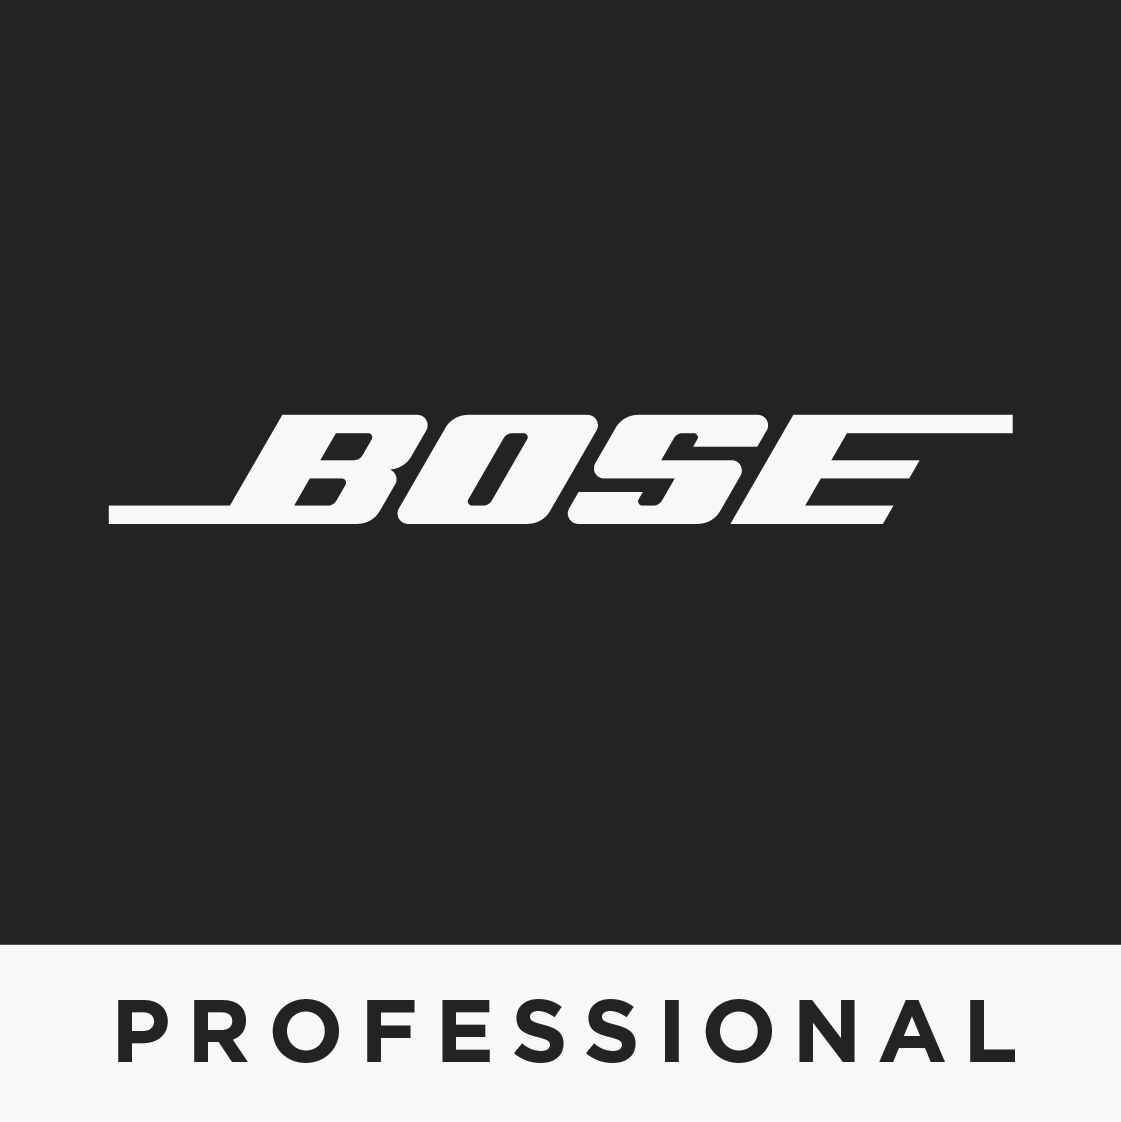 bose-pro-logo-black-jpeg